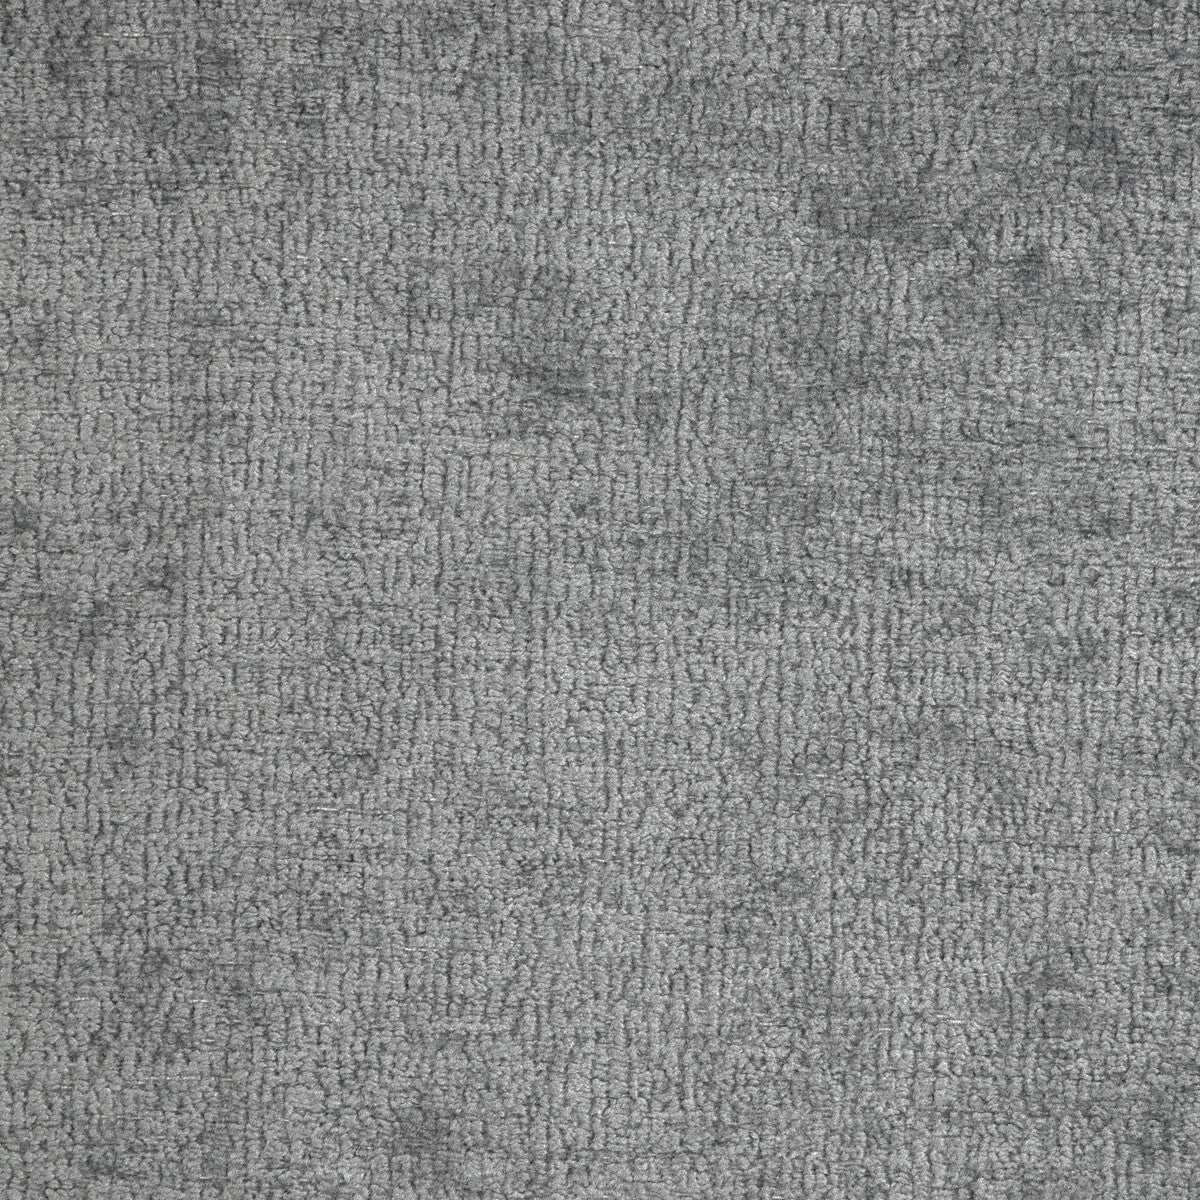 Kravet Smart fabric in 36985-11 color - pattern 36985.11.0 - by Kravet Smart